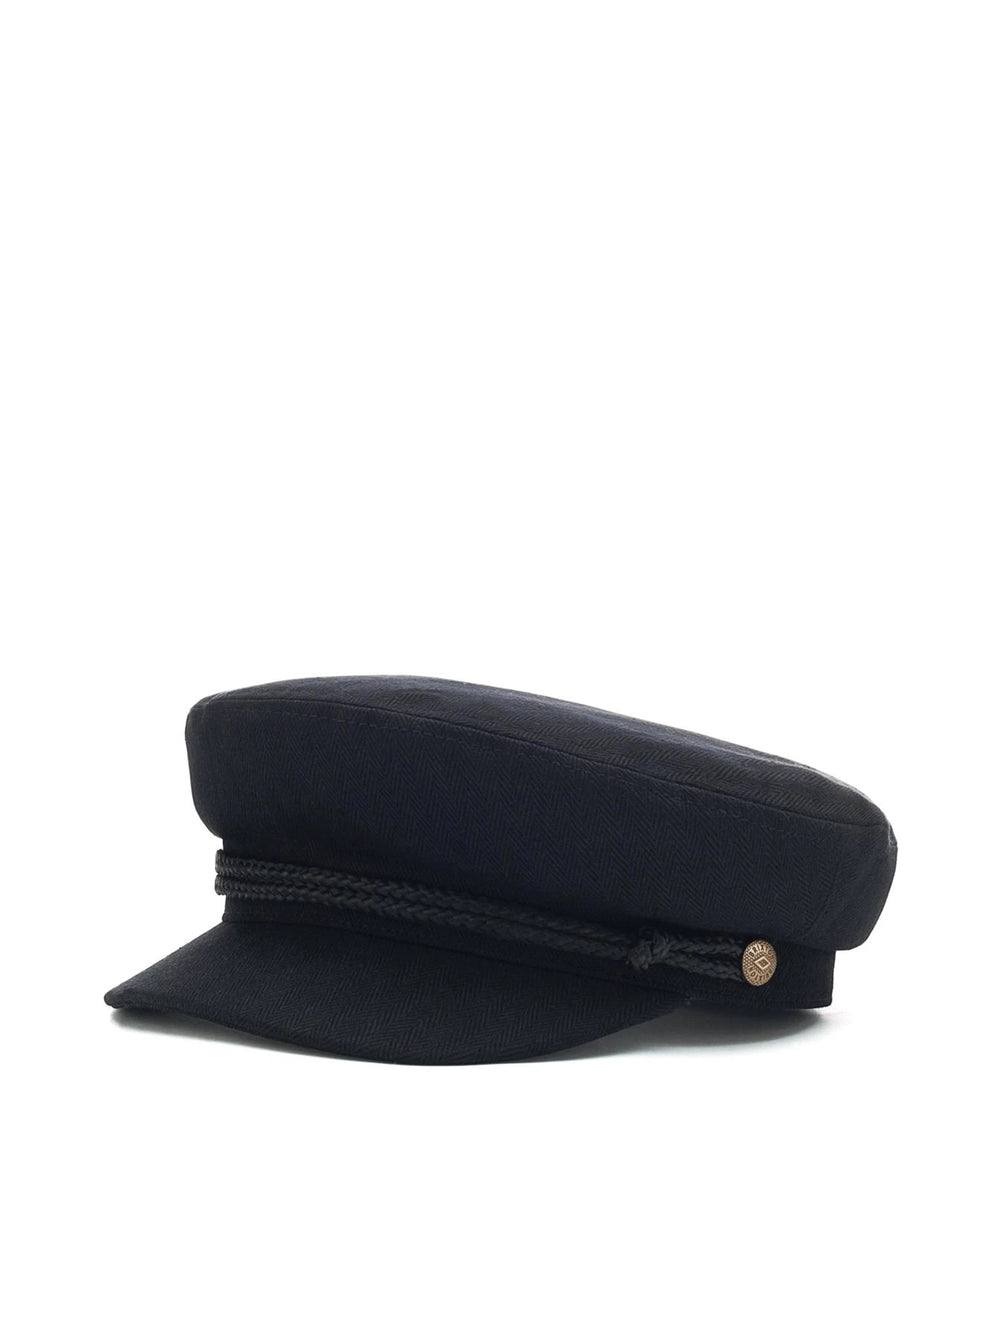 FIDDLER CAP - BLACK - CLEARANCE